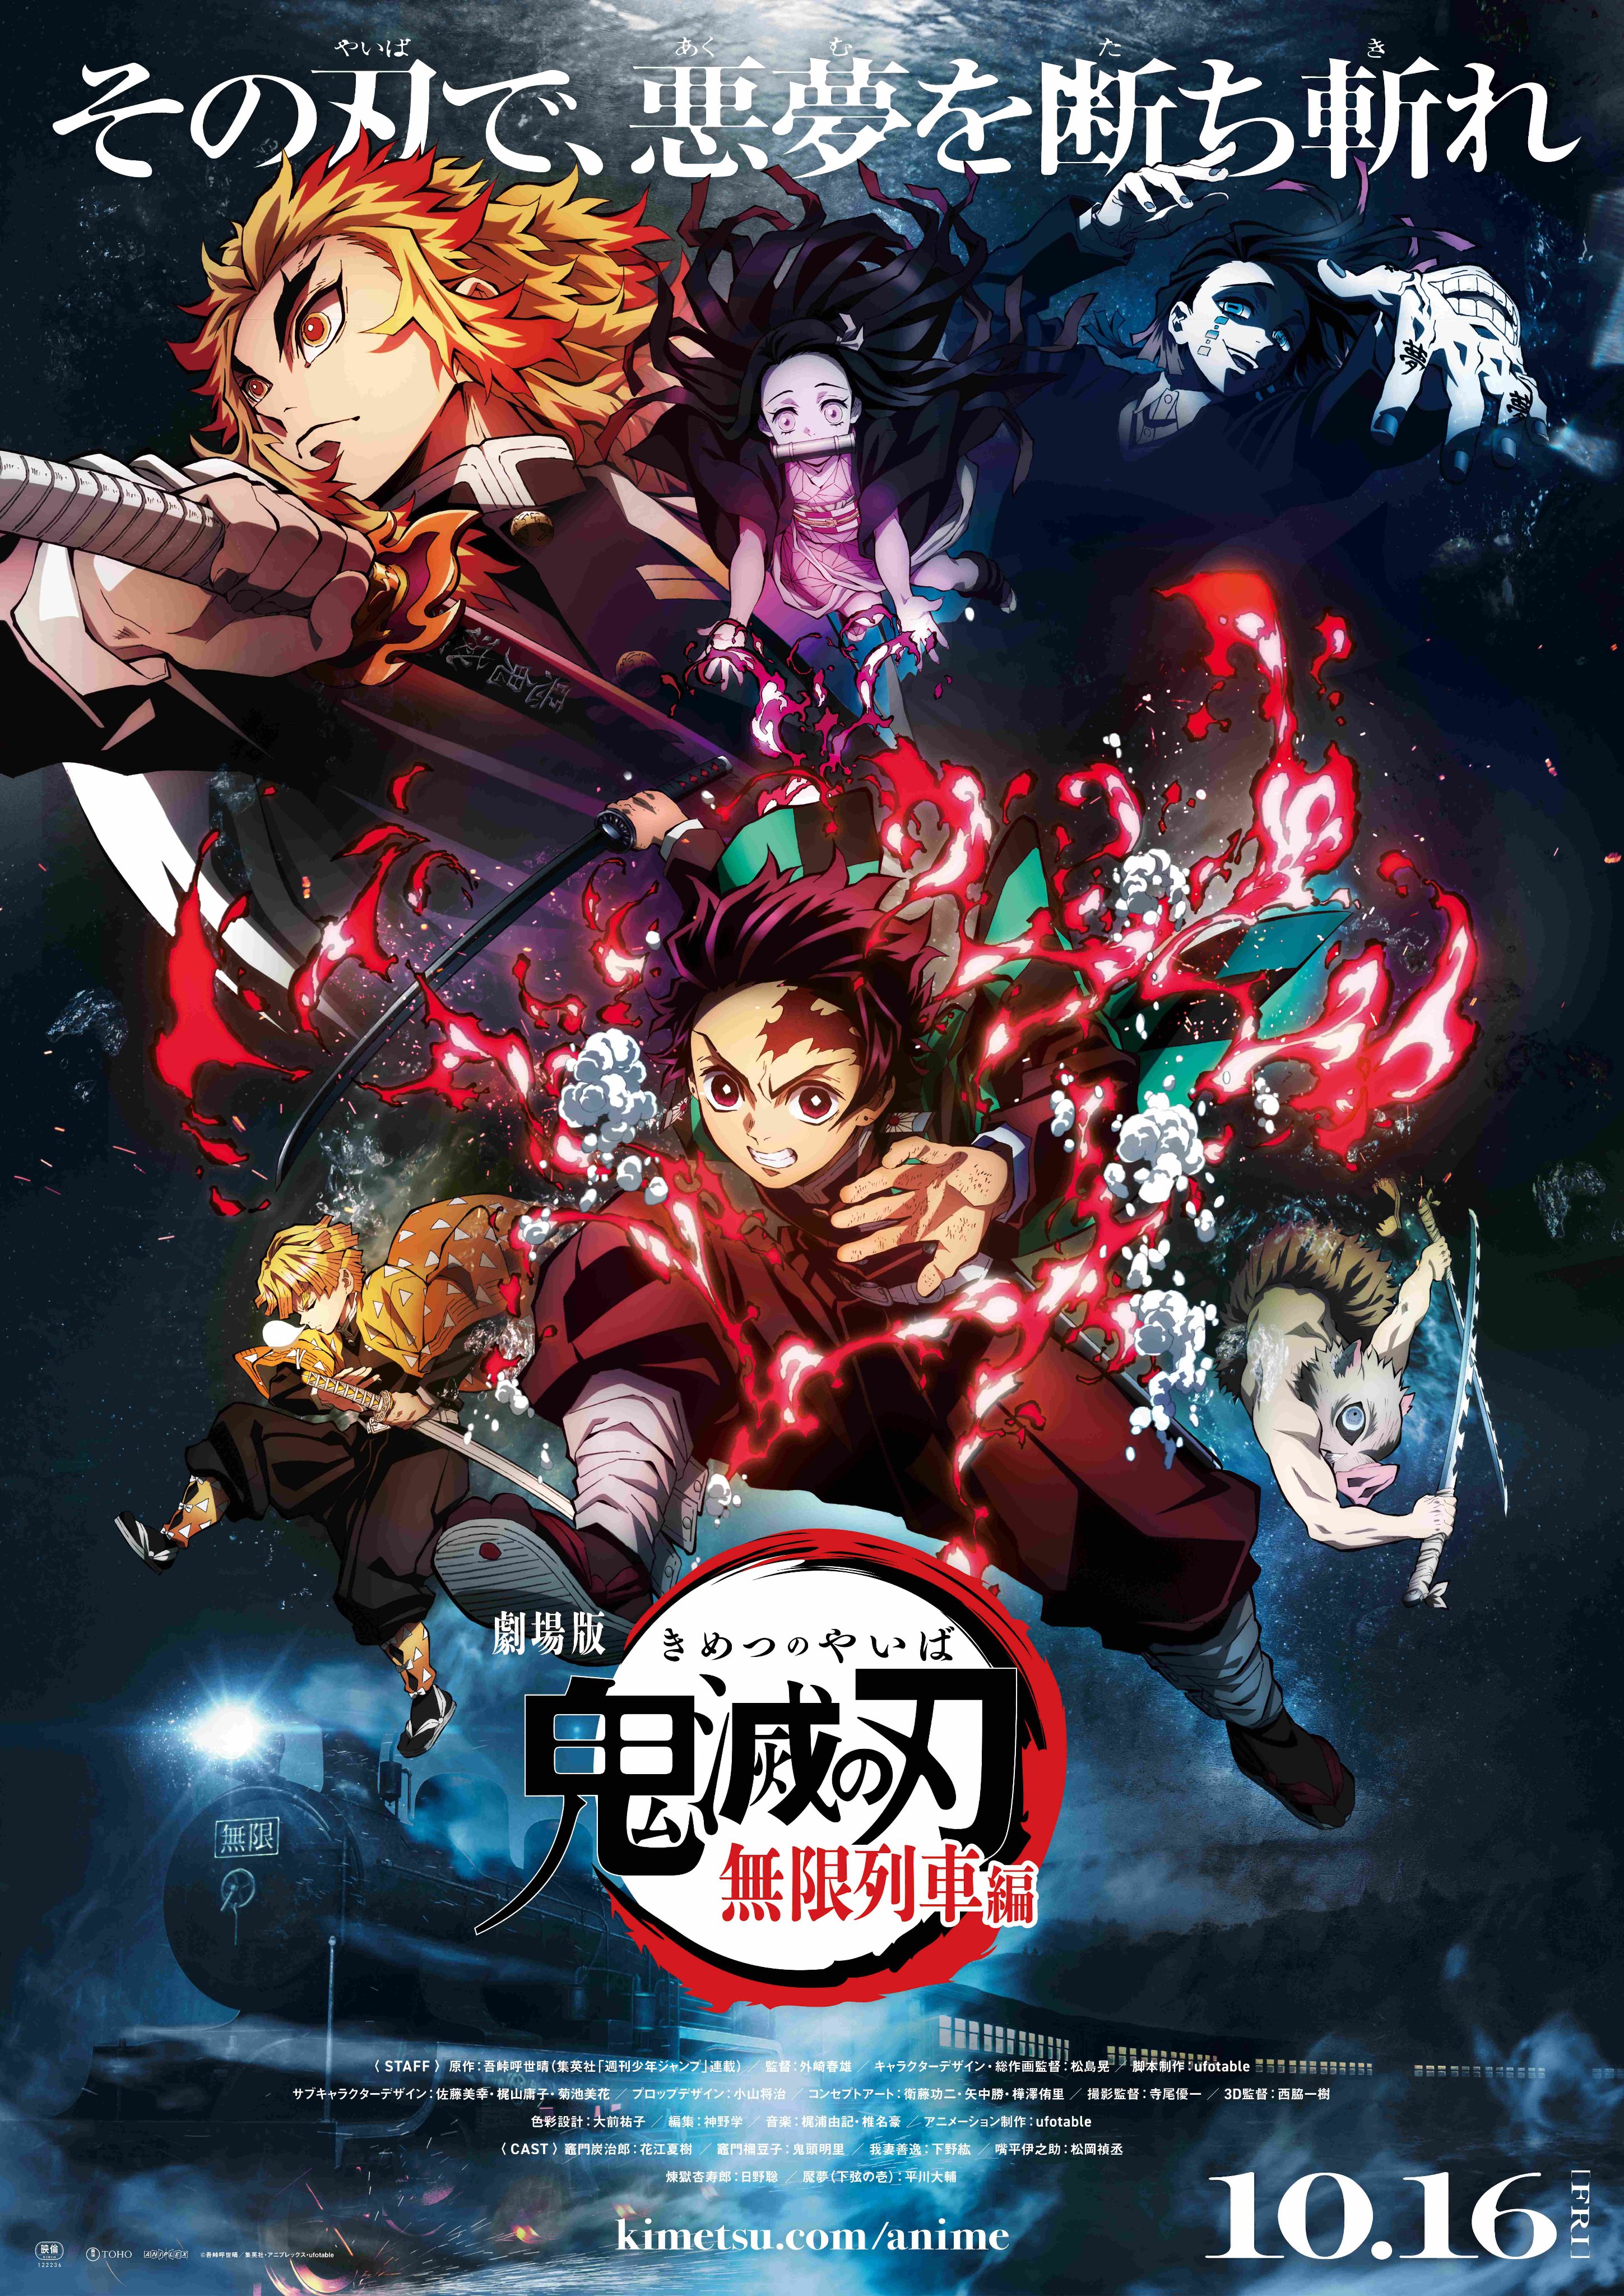  Demon Slayer Kimetsu no Yaiba Mugen Train Arc Limited Edition  Blu-ray : Movies & TV